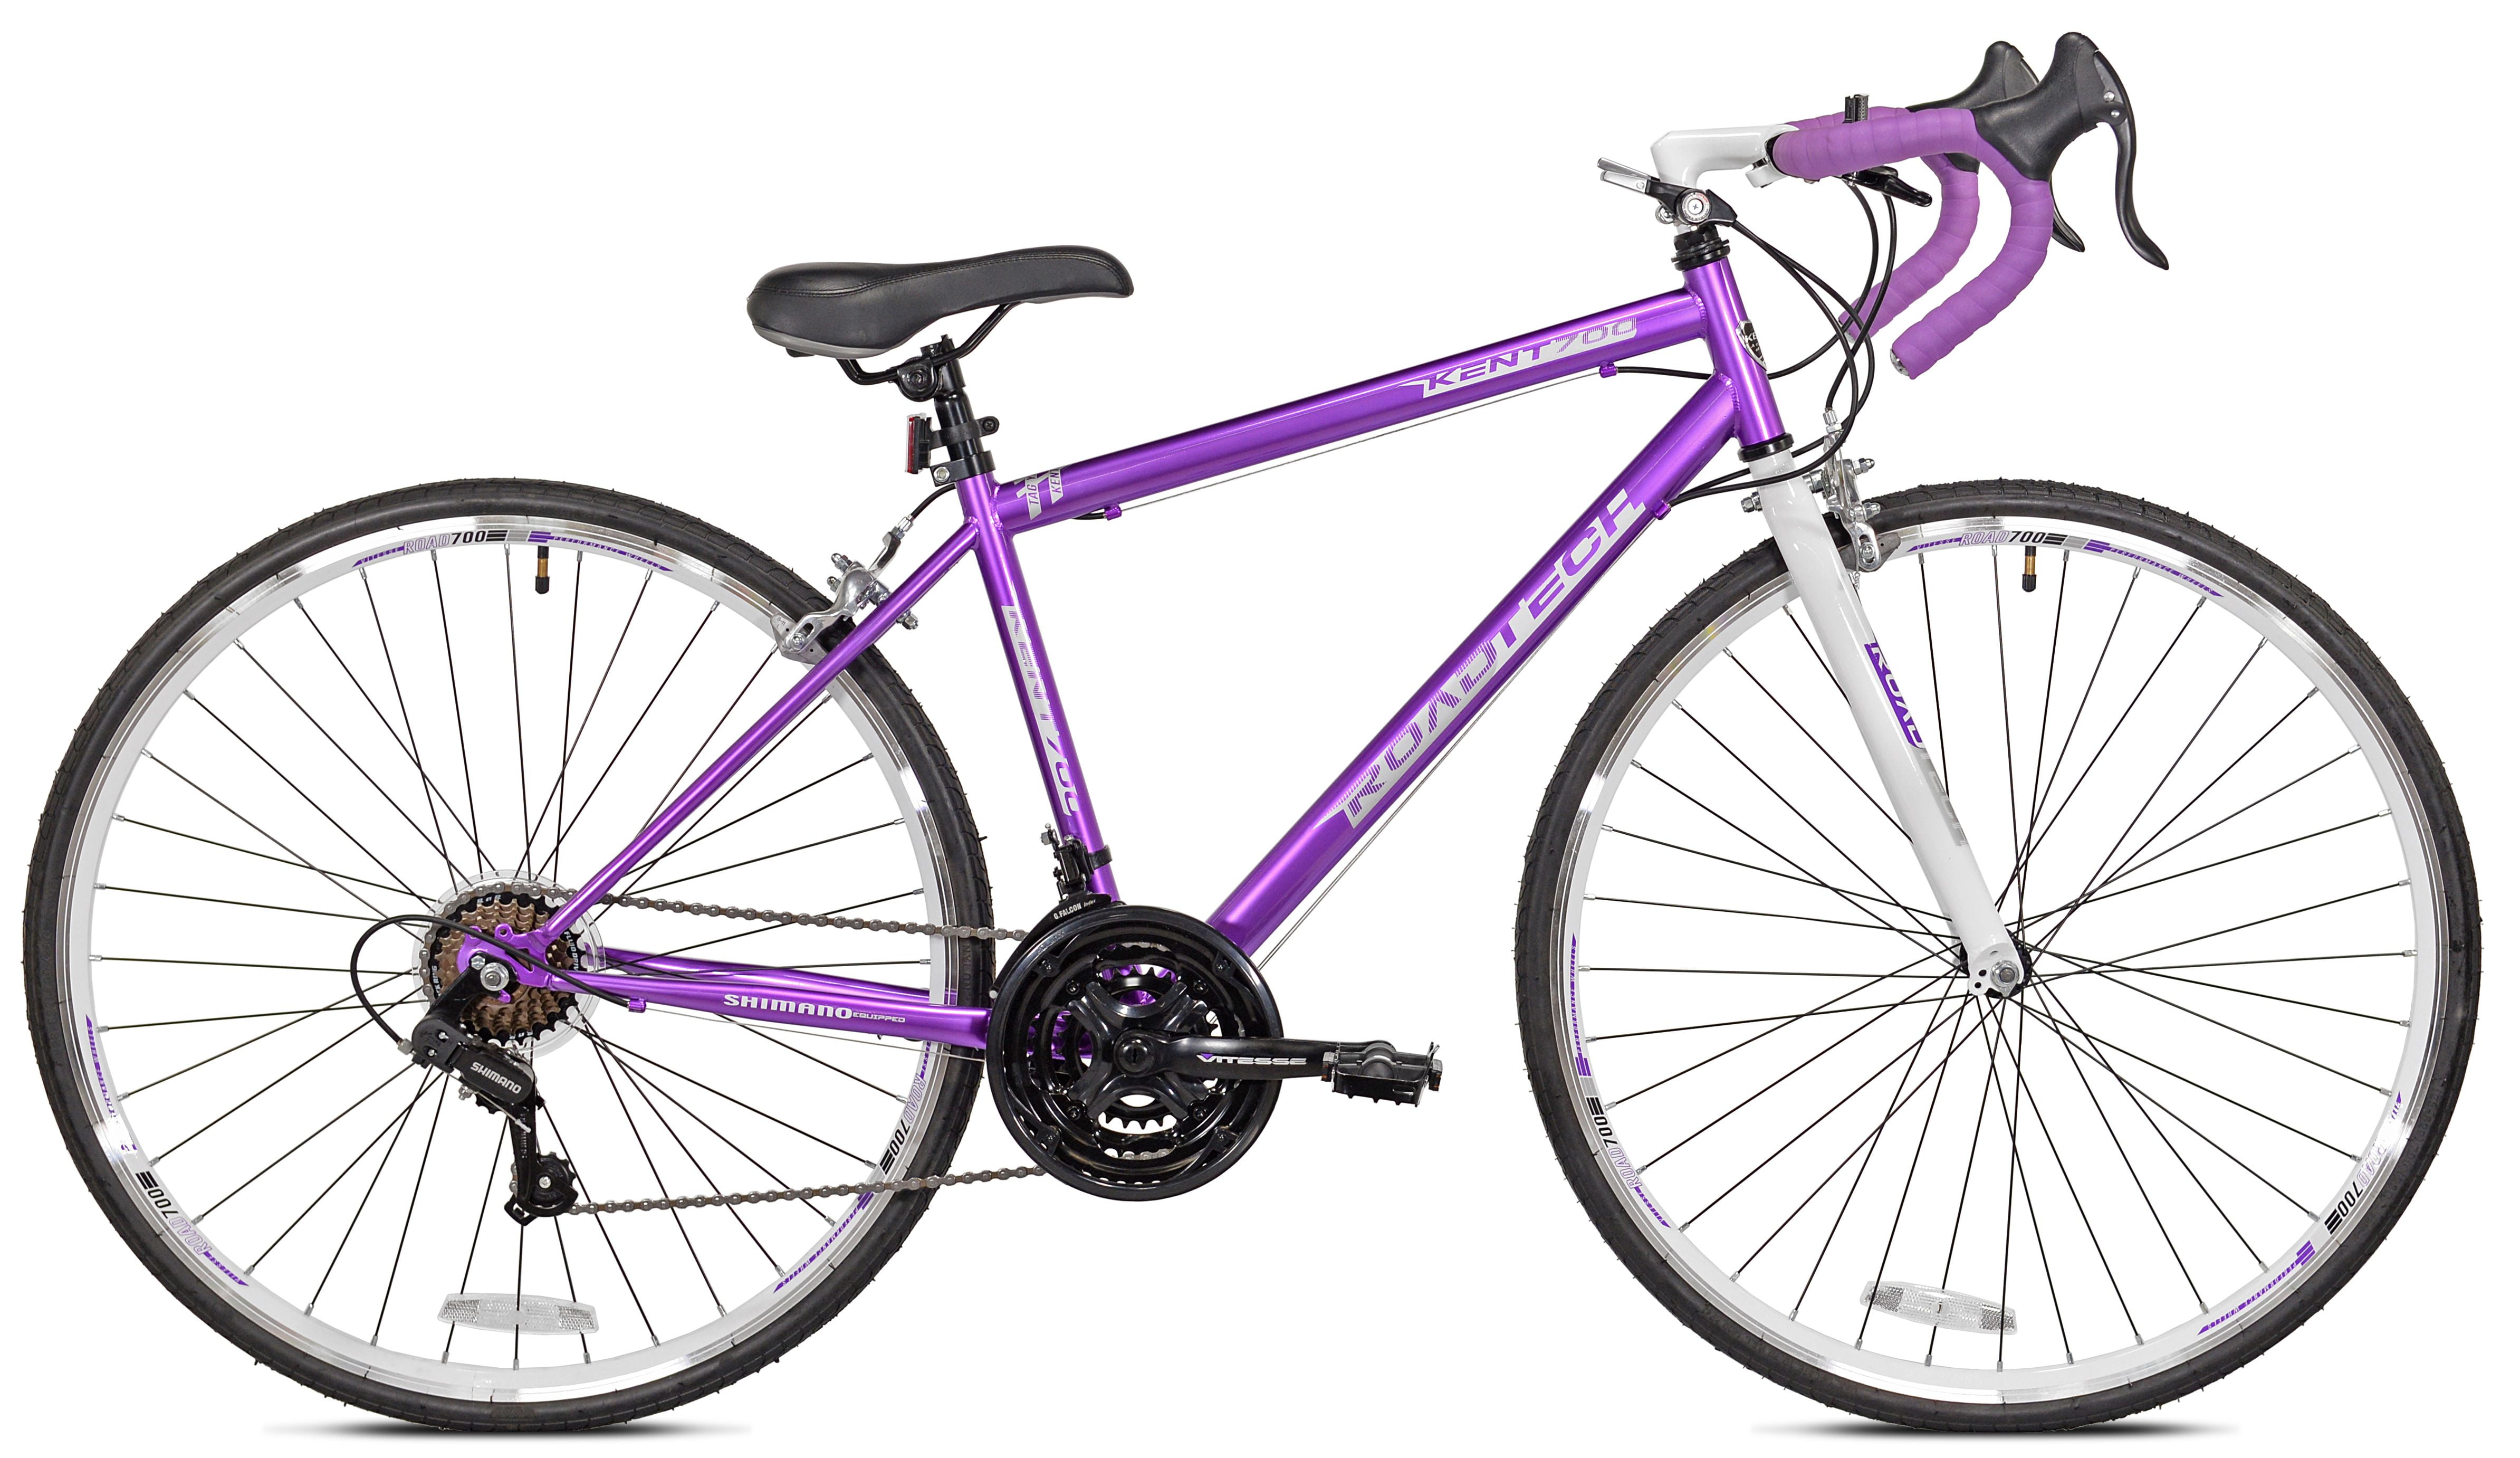 Kent Bicycles: 700c Women's RoadTech Road Bike (Purple/White) $128, 700c Susan G. Komen Women's Courage Road Bike (Pink/Black) $128 + Free Shipping